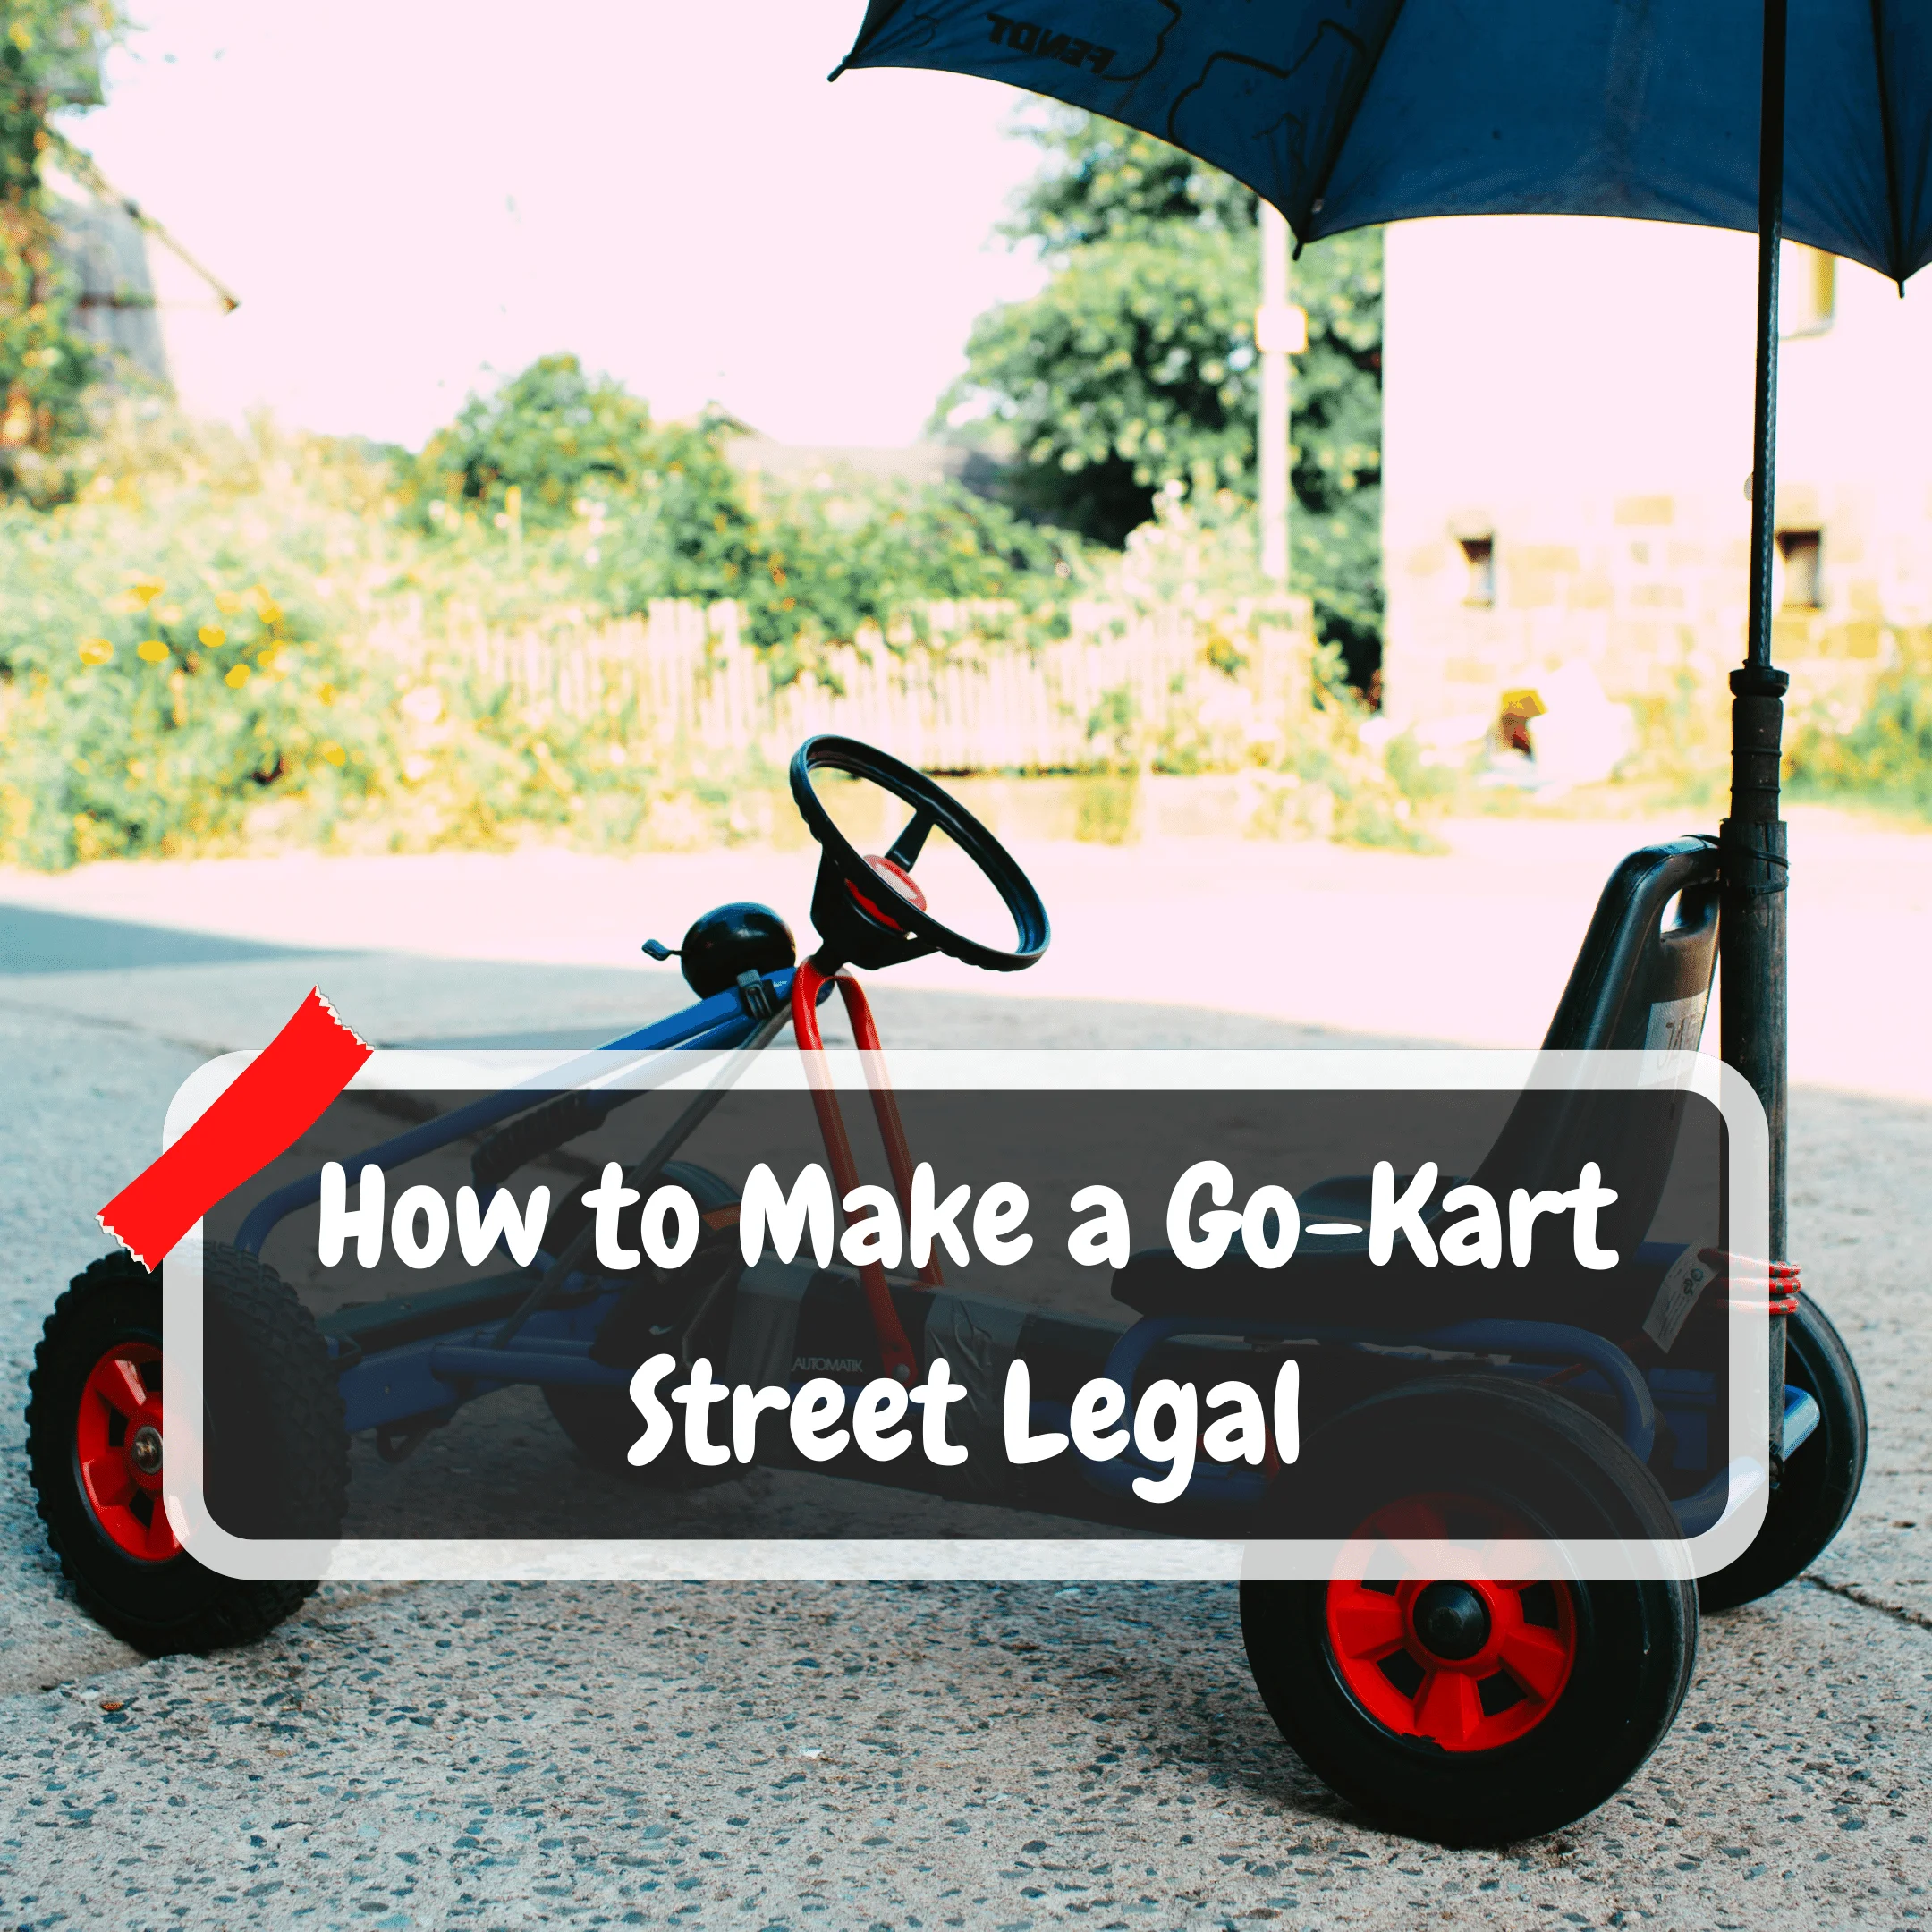 How to Make a Go-Kart Street Legal